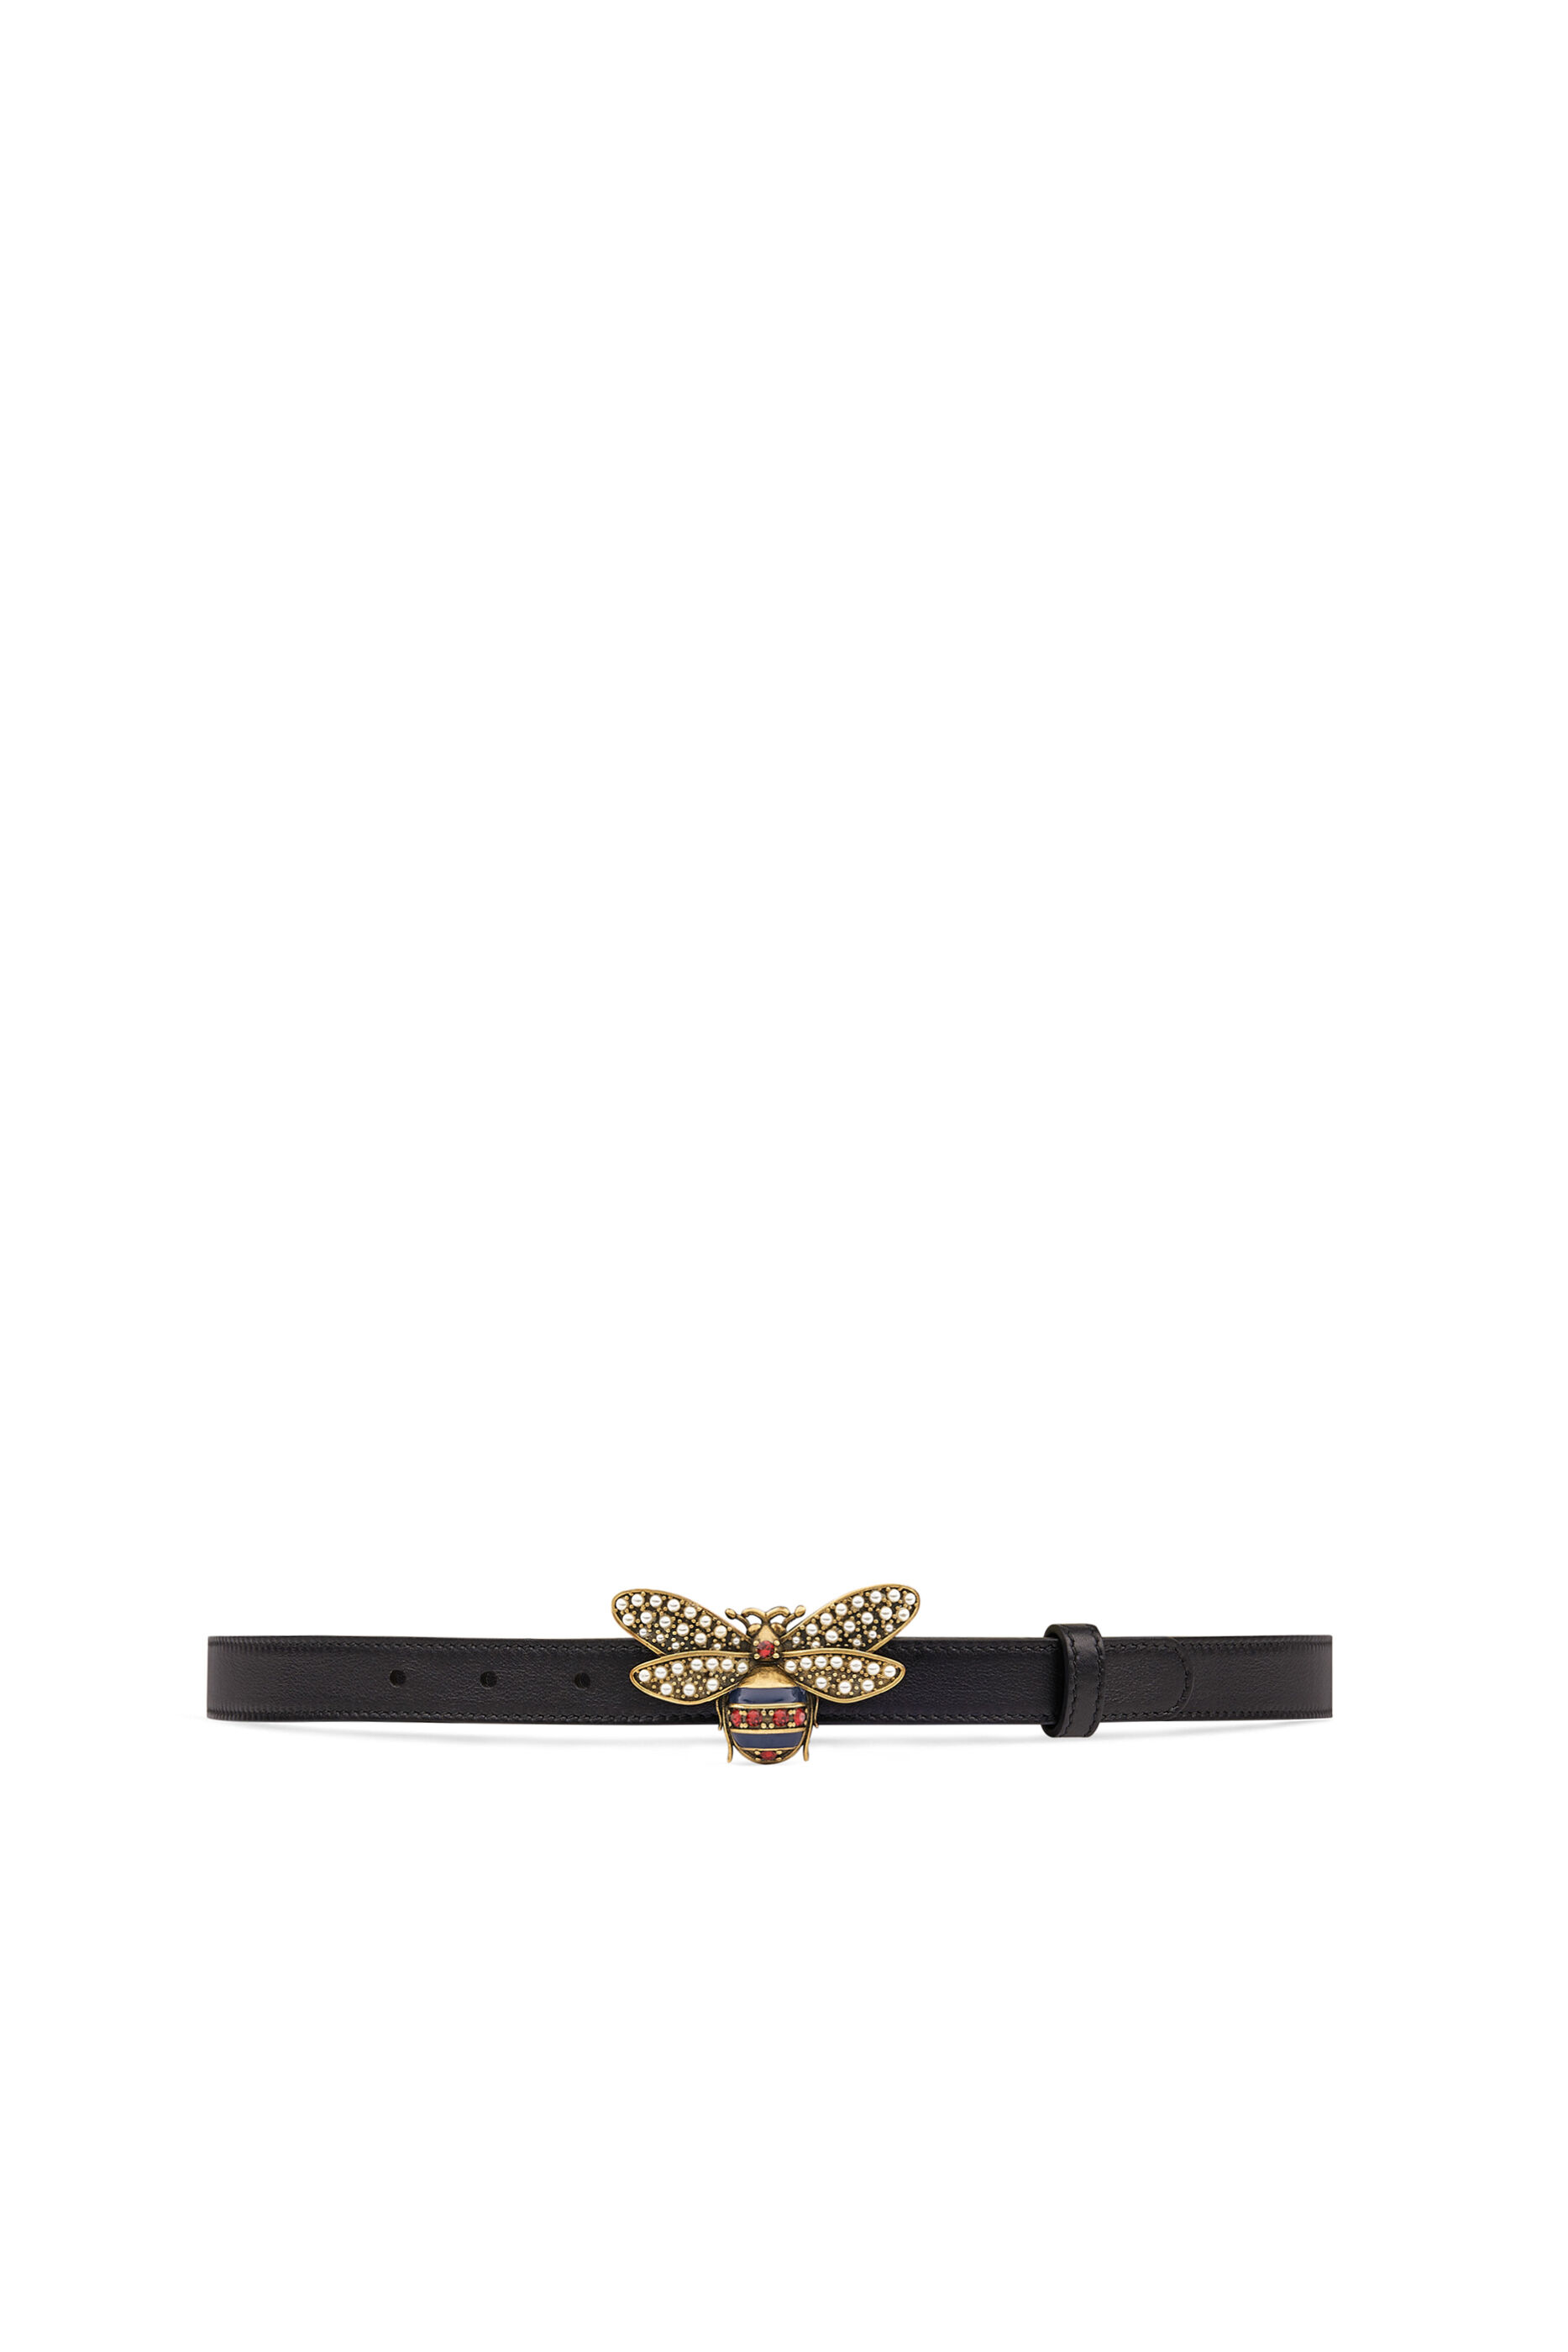 gucci queen margaret leather belt